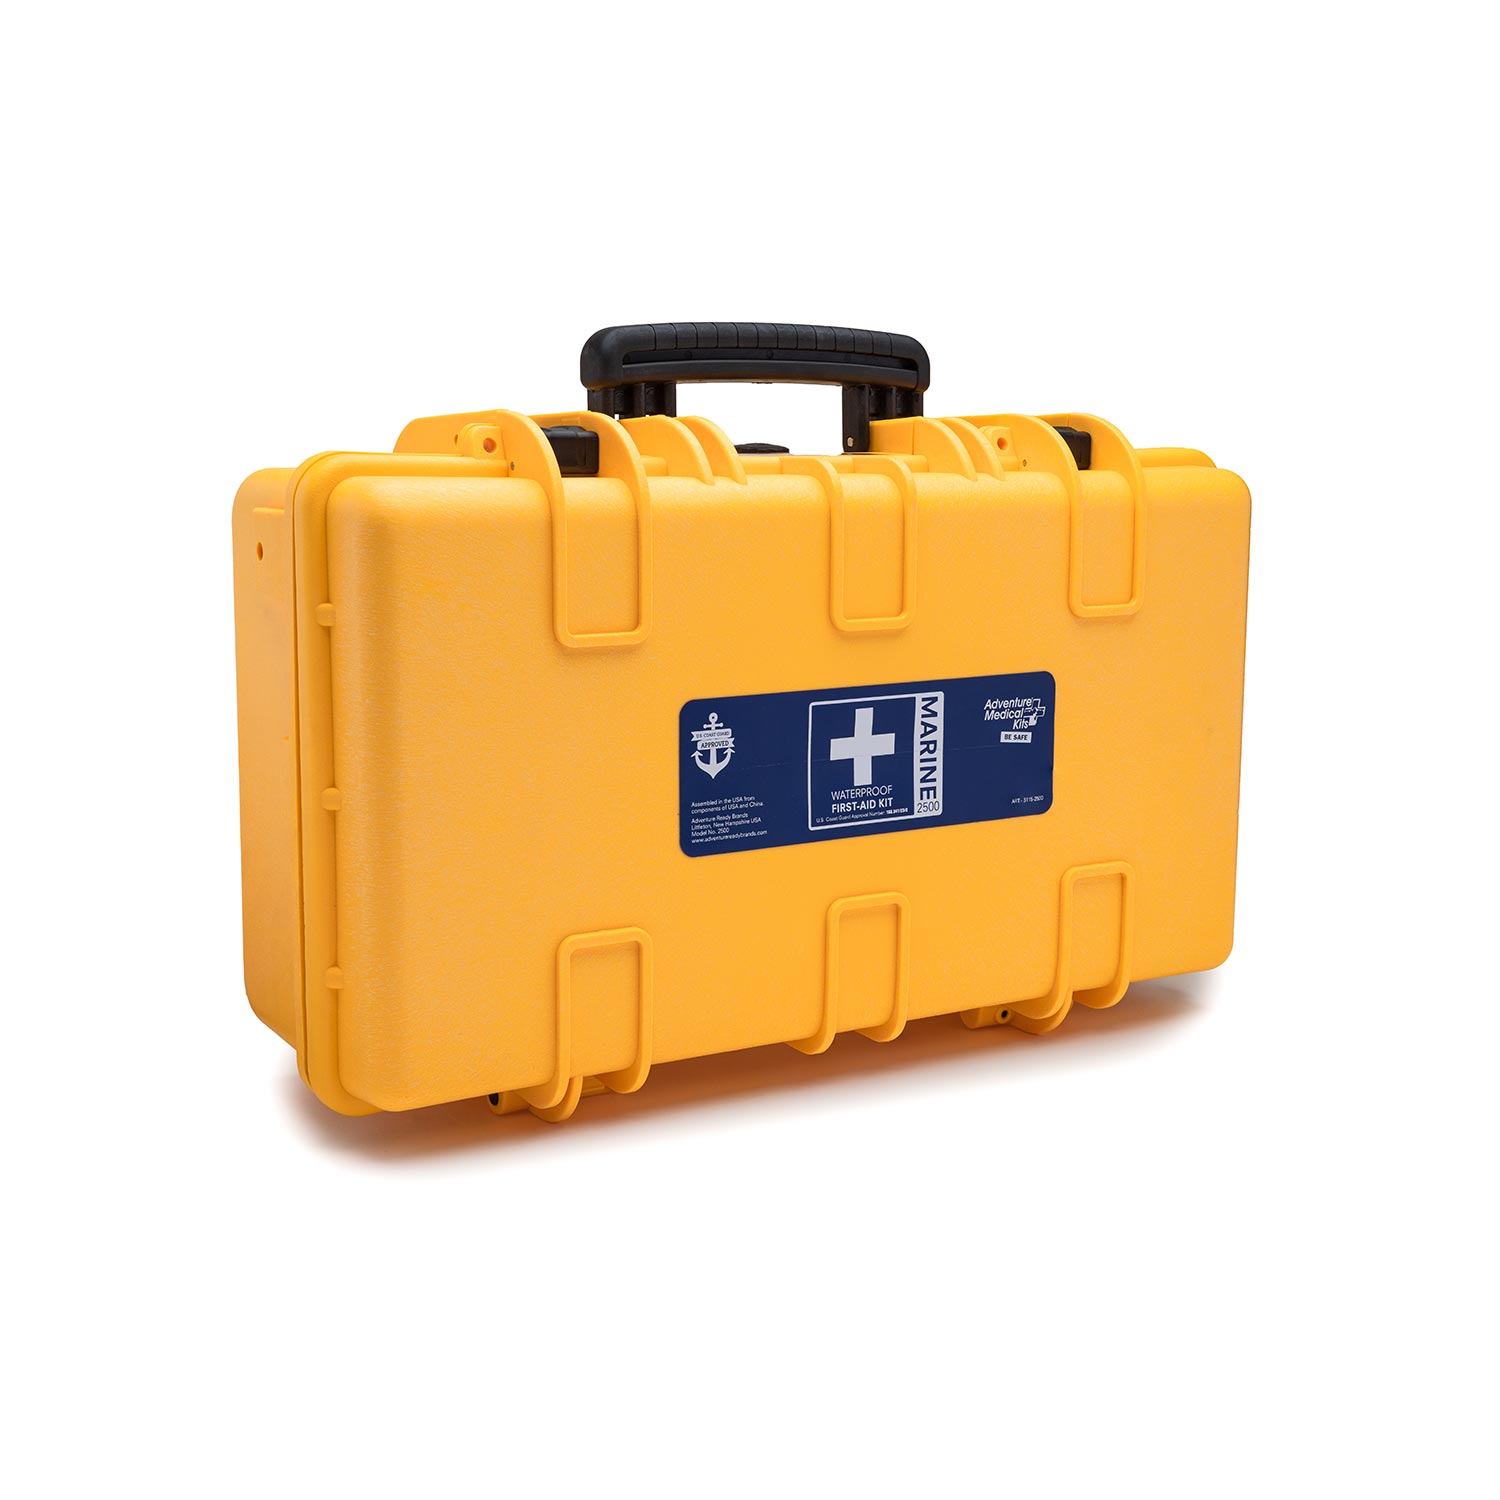 Orange Waterproof Small Storage Box First Aid Survival Emergency Boating Kits 